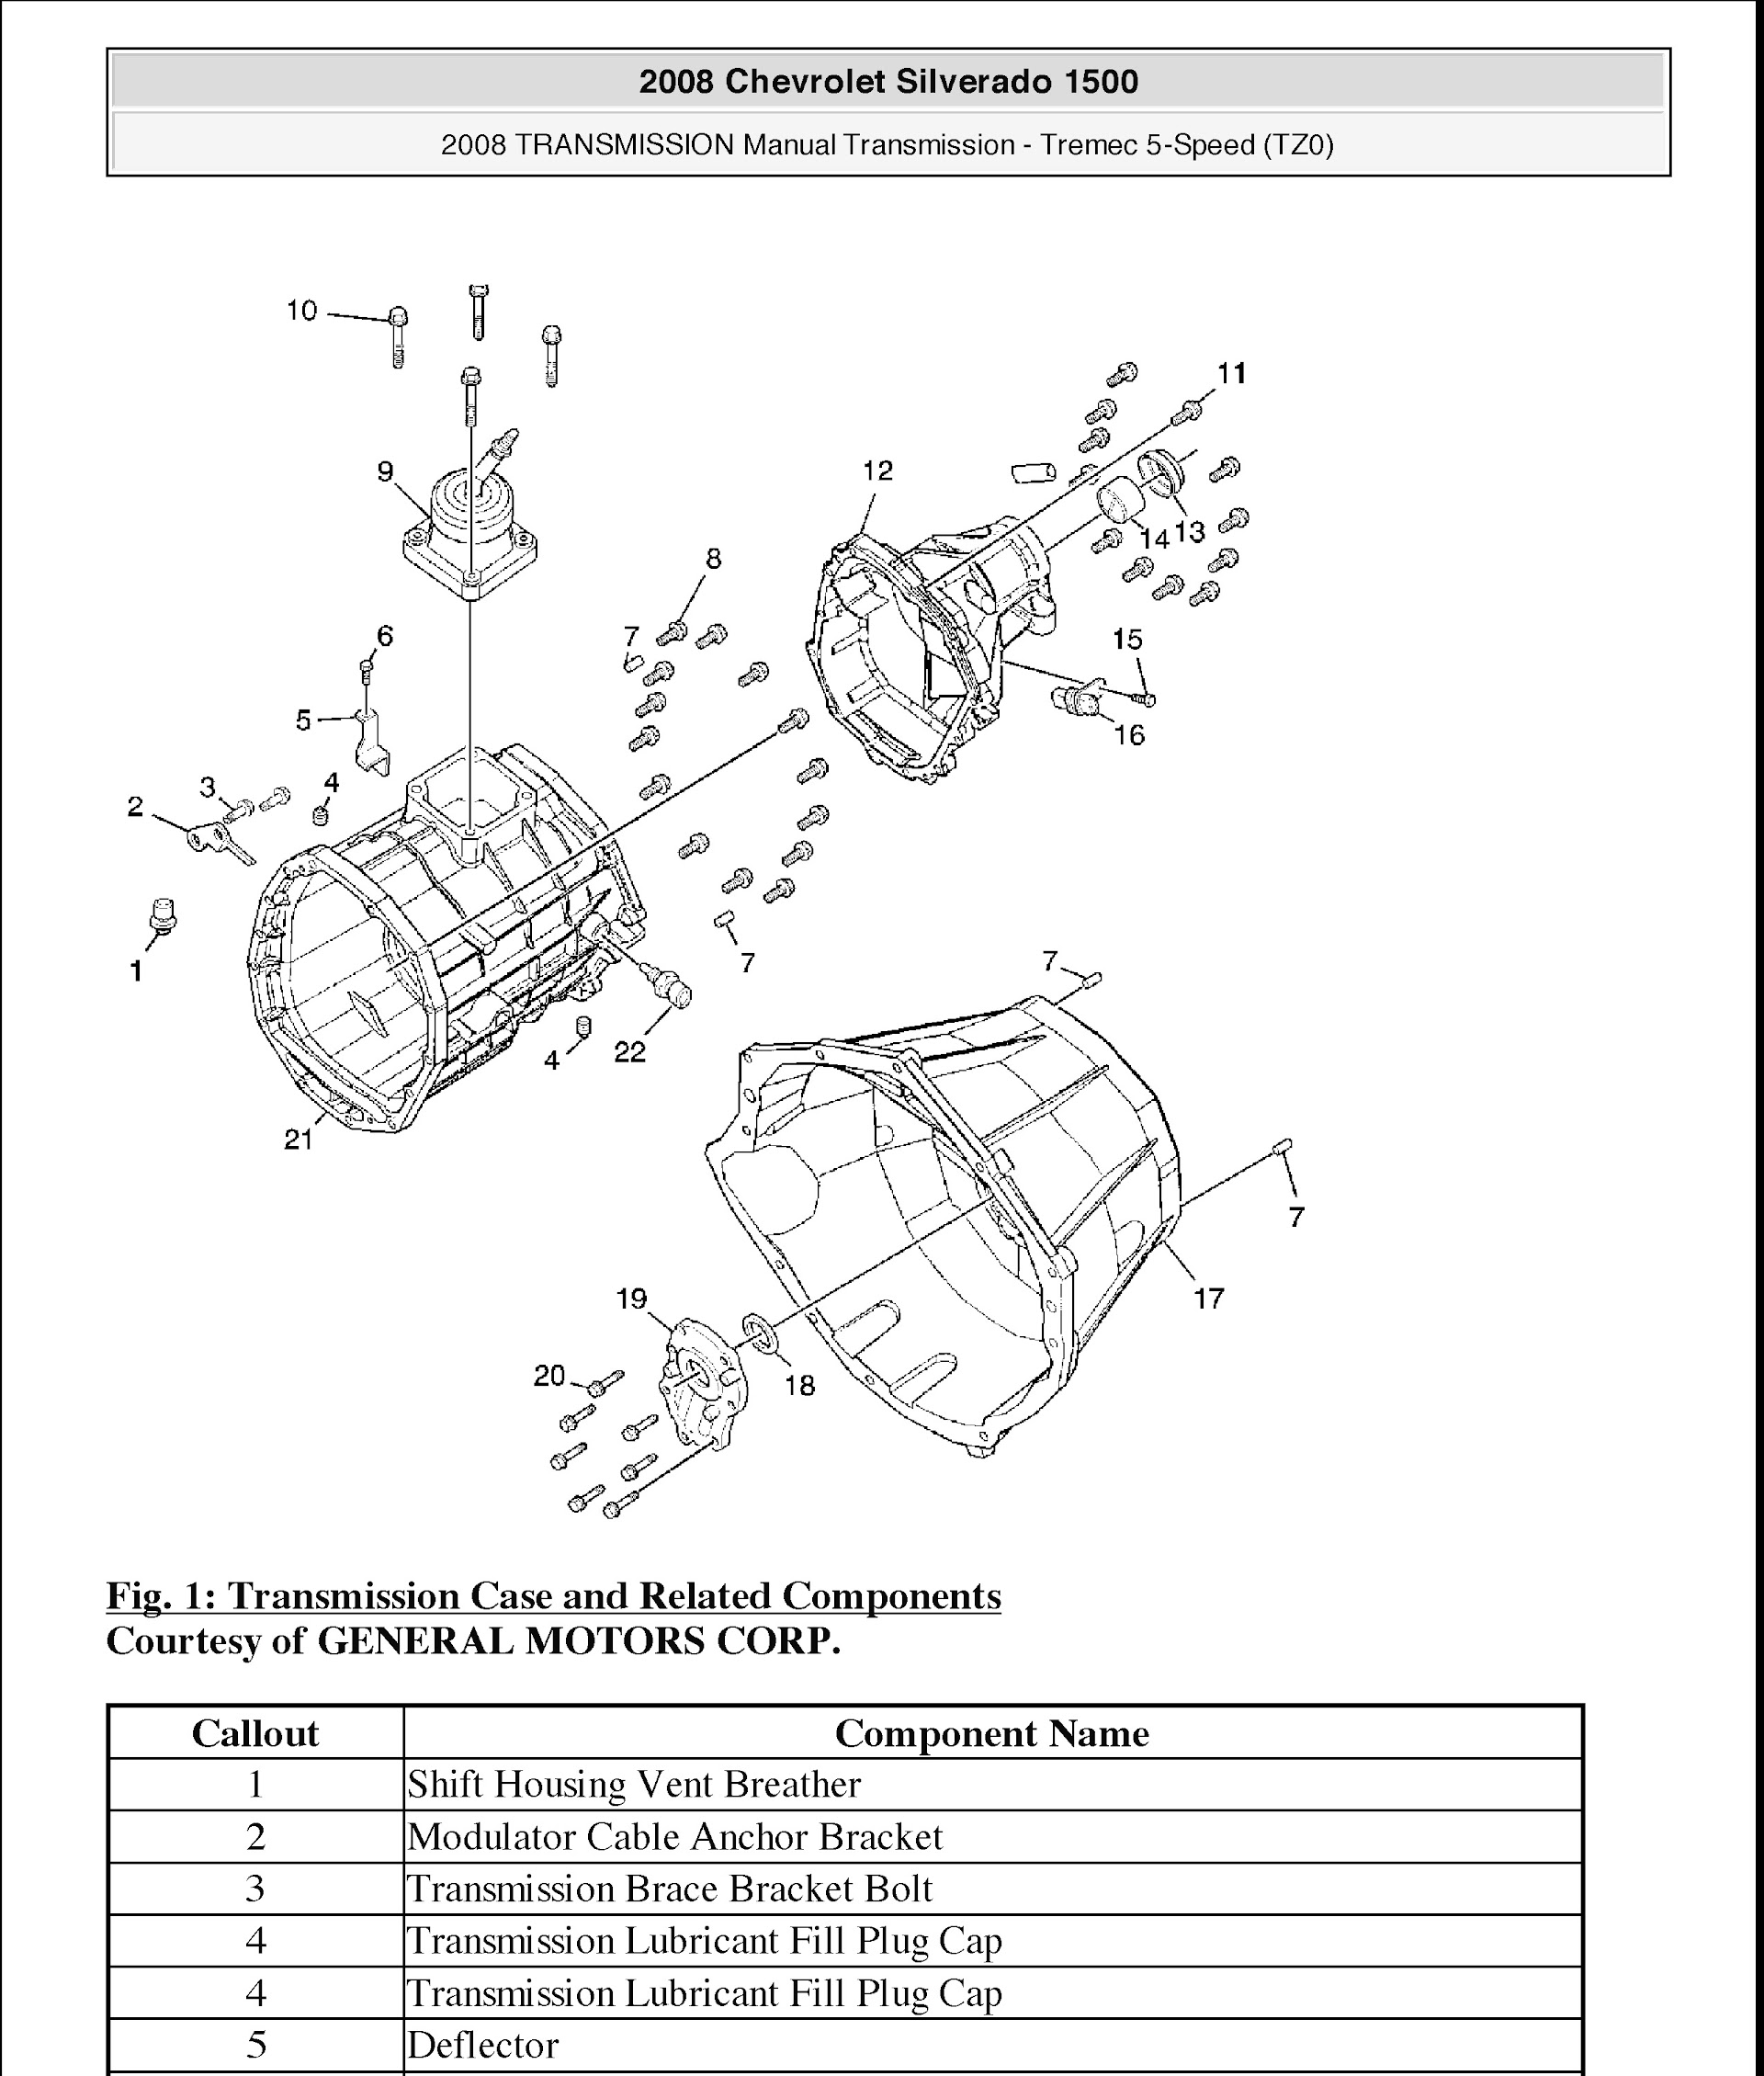 Chevrolet Silverado 1500 Repair Manual, Manual Transmission